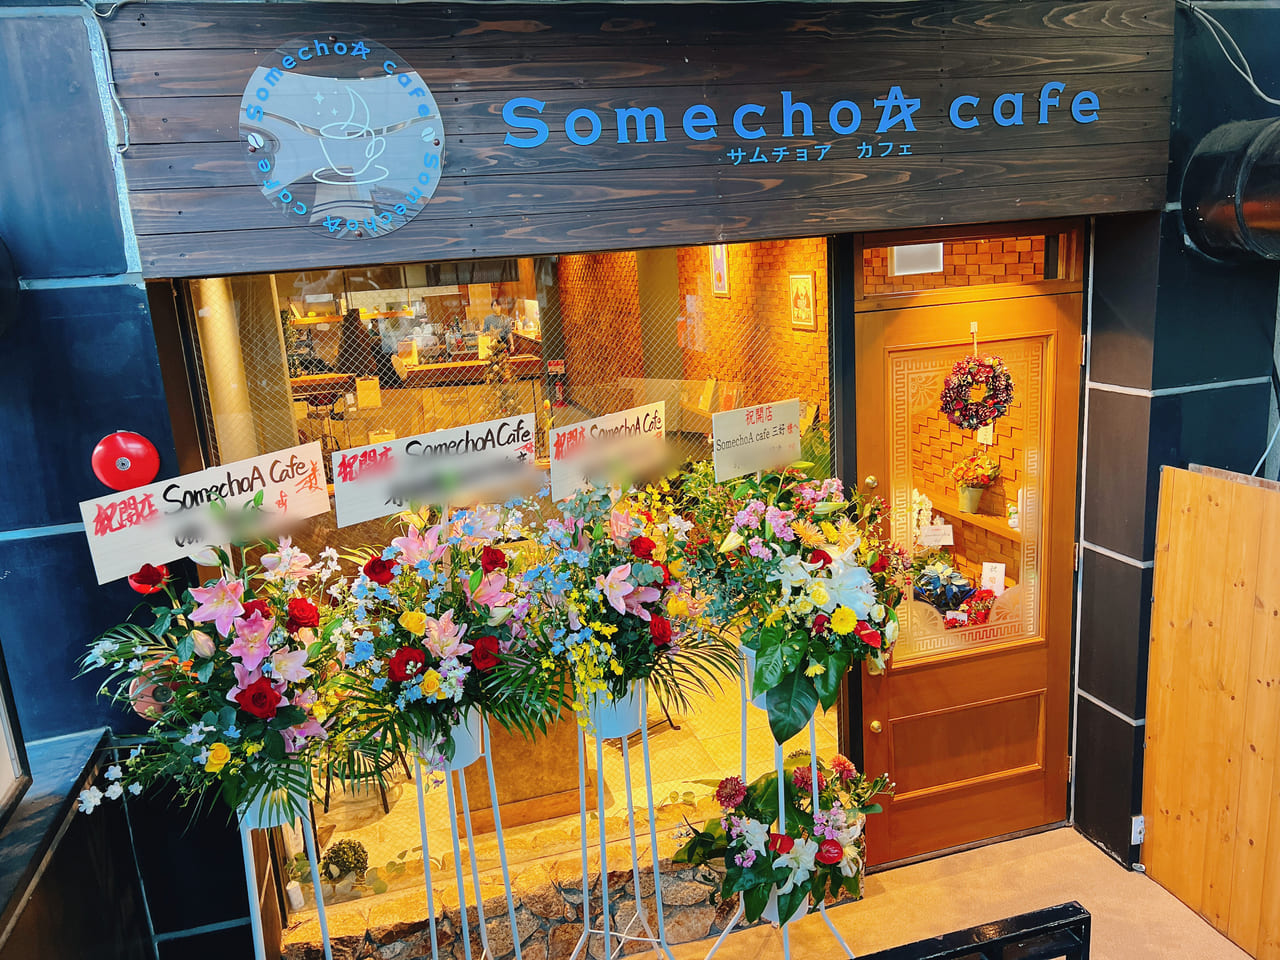 SomechoA cafe　サムチョアカフェ